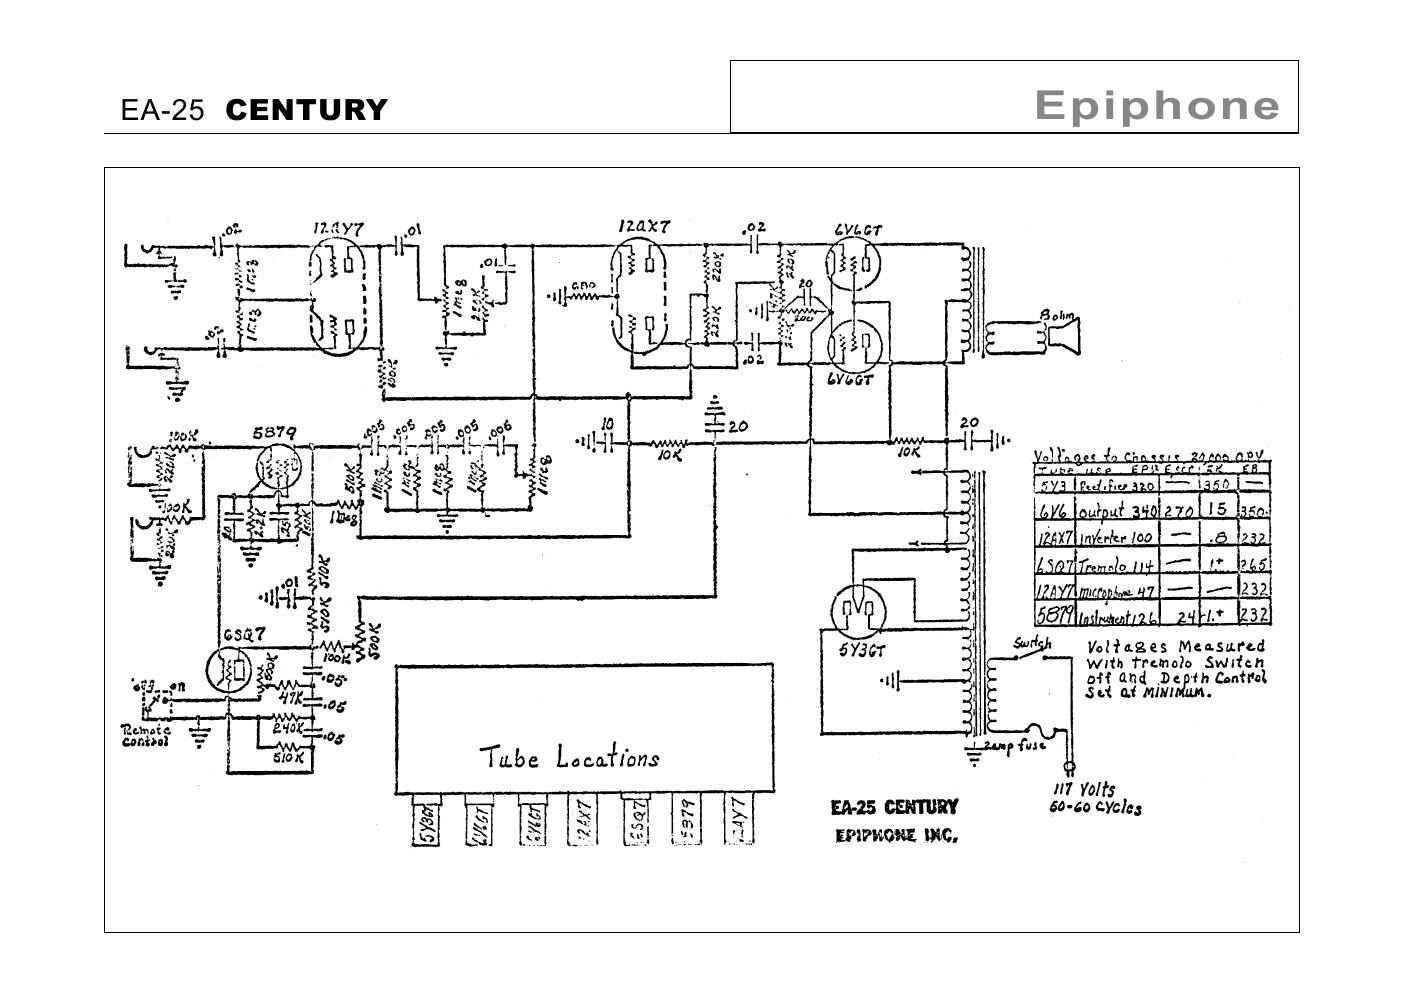 epiphone ea 25 century